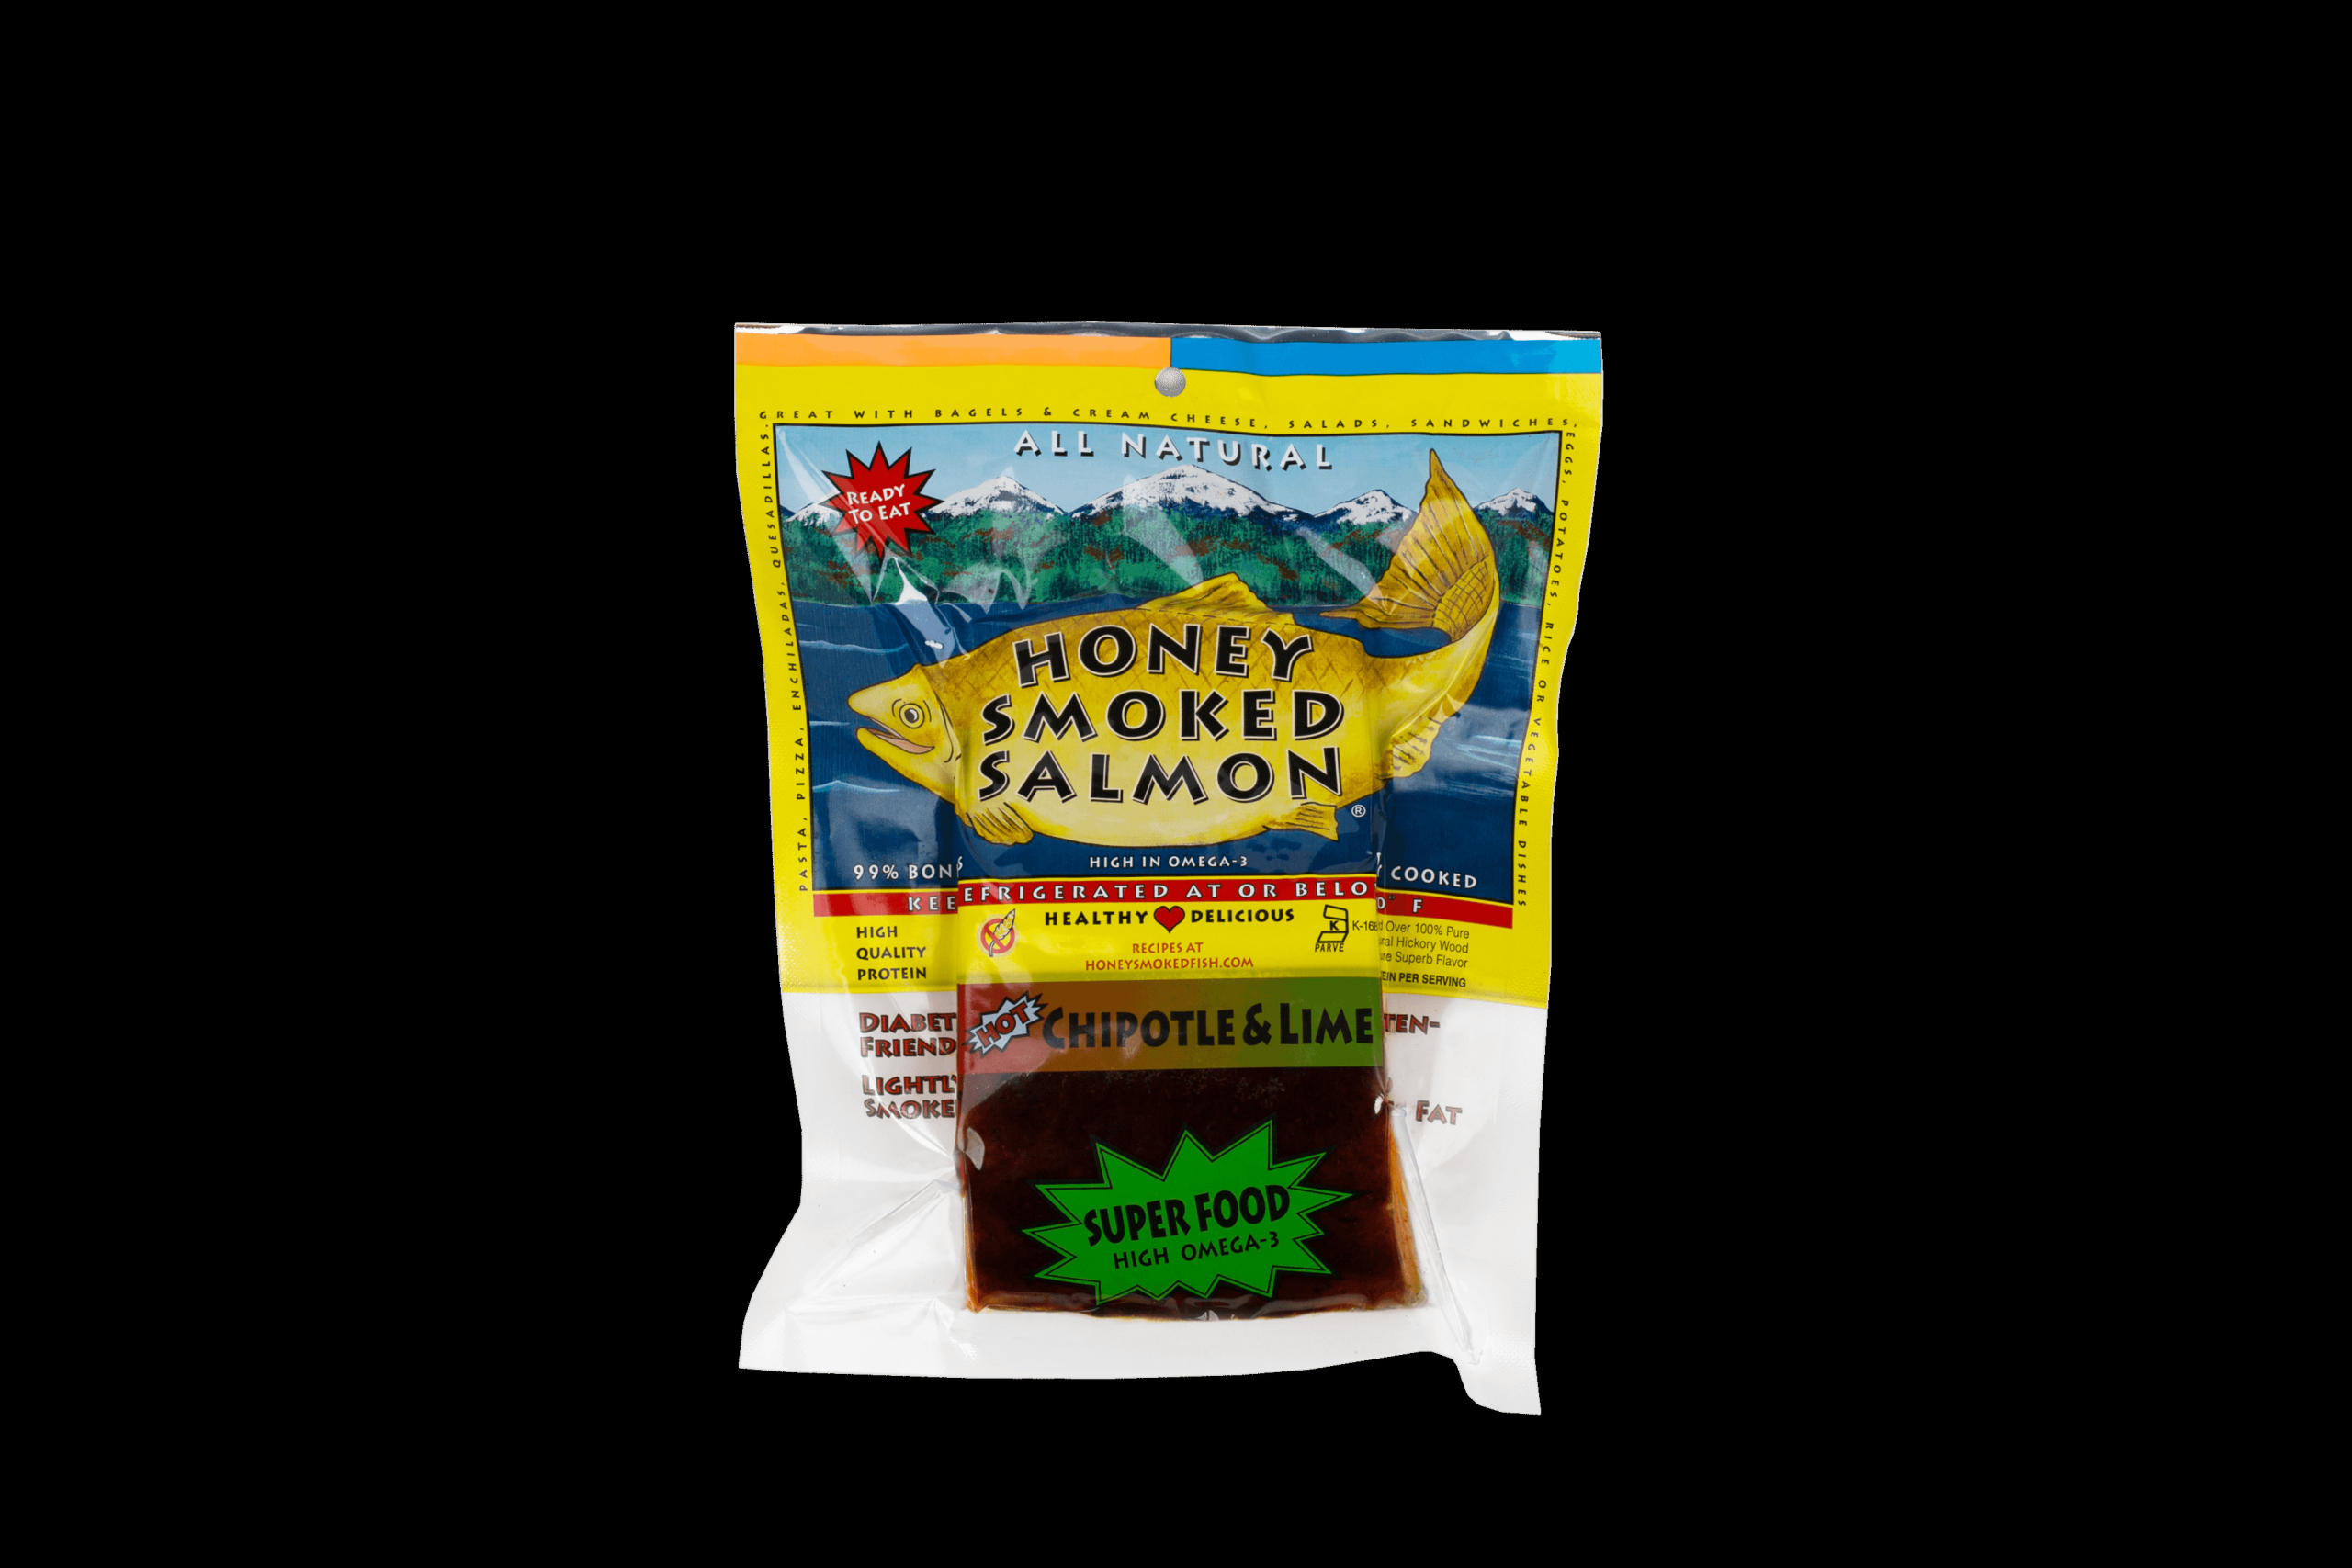 Smoked Salmon Walmart
 Honey Smoked Salmon Chipotle & Lime Flavor Walmart